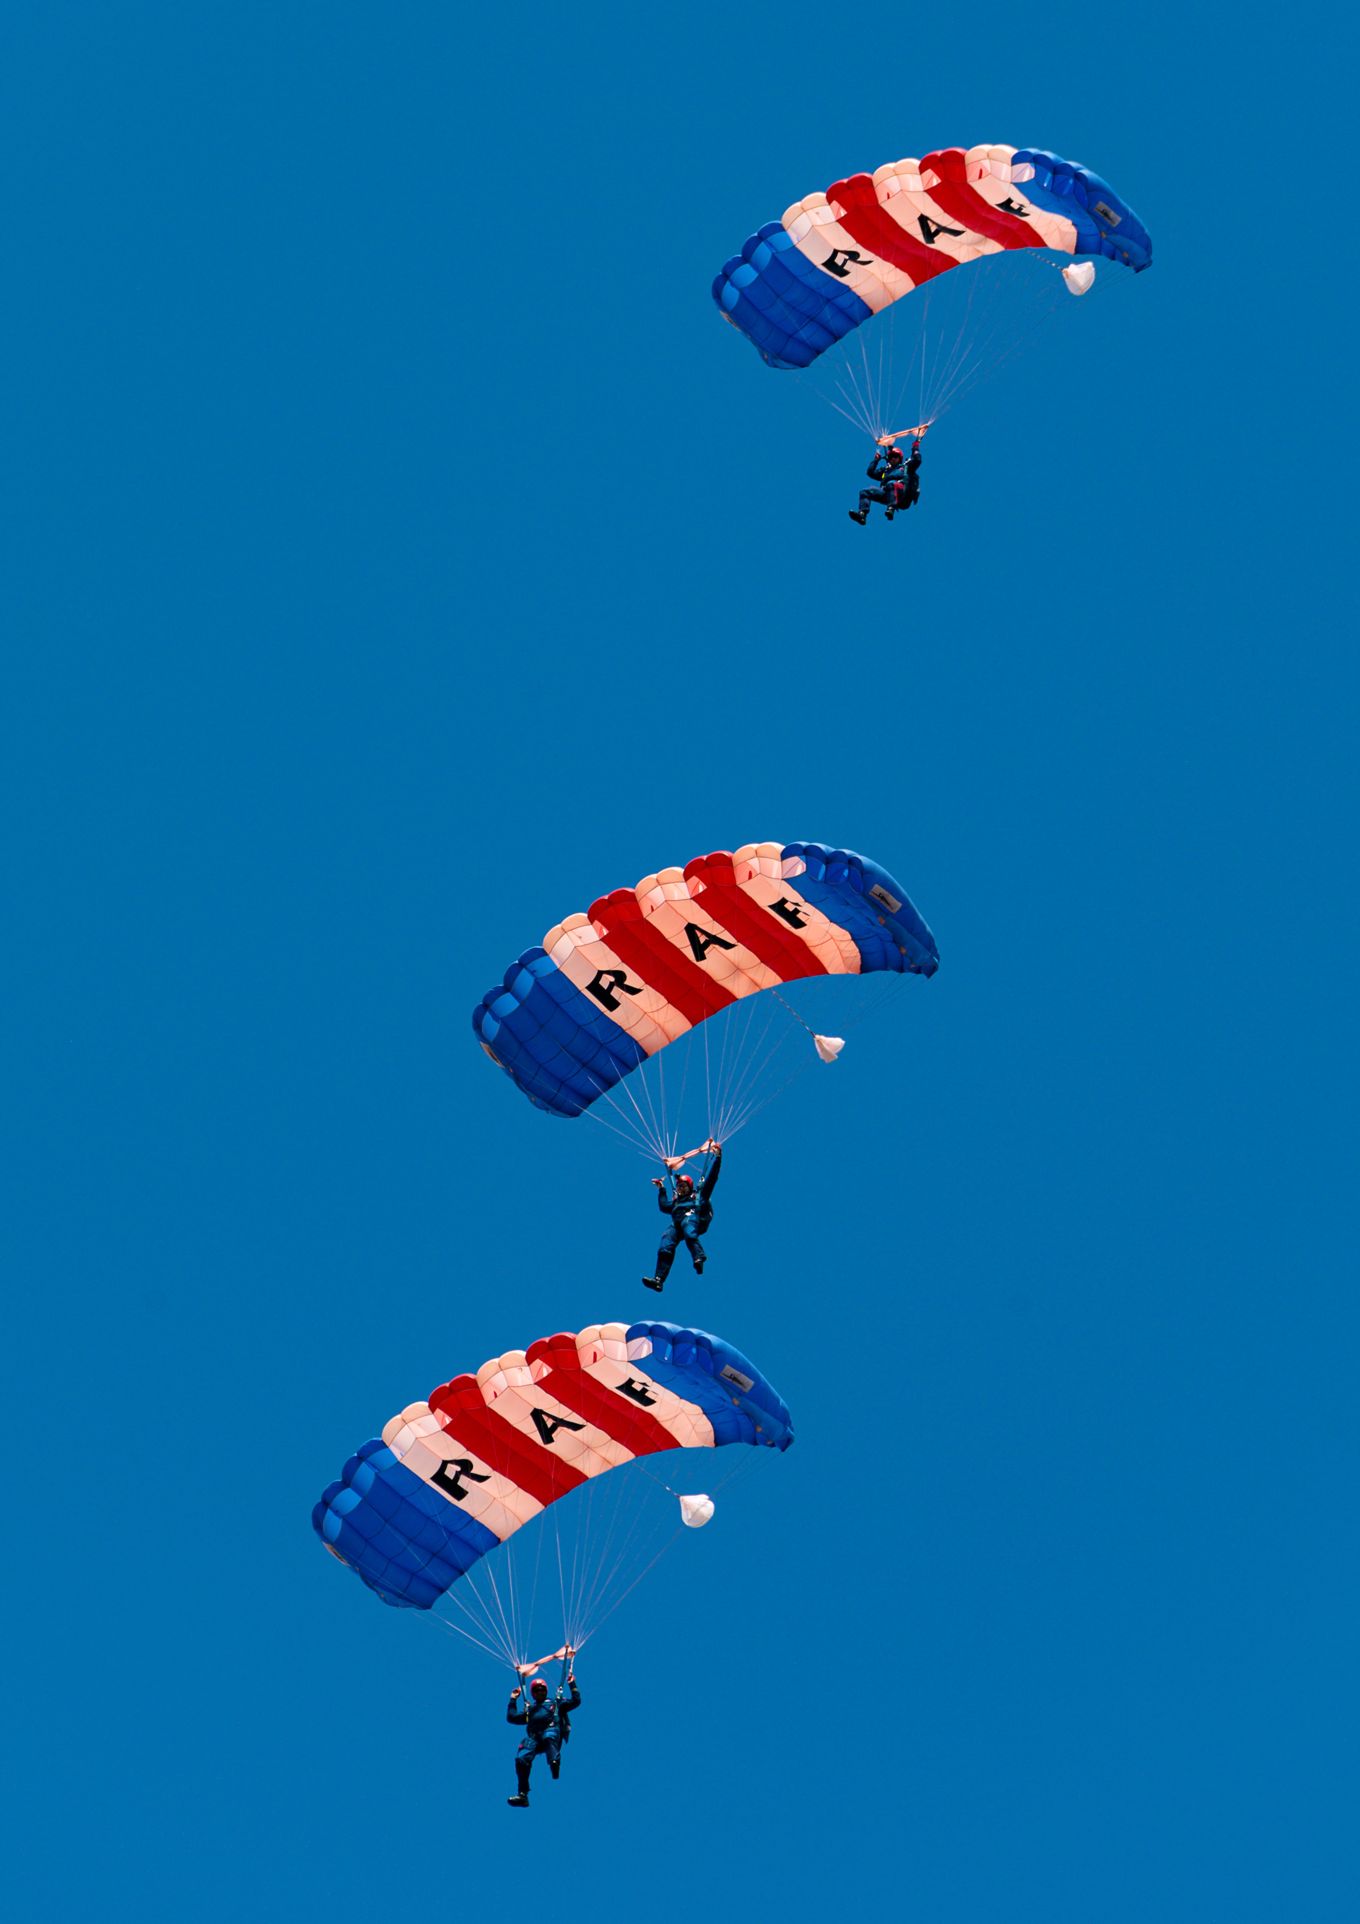 The RAF Falcons conduct Parachute Training at RAF Brize Norton